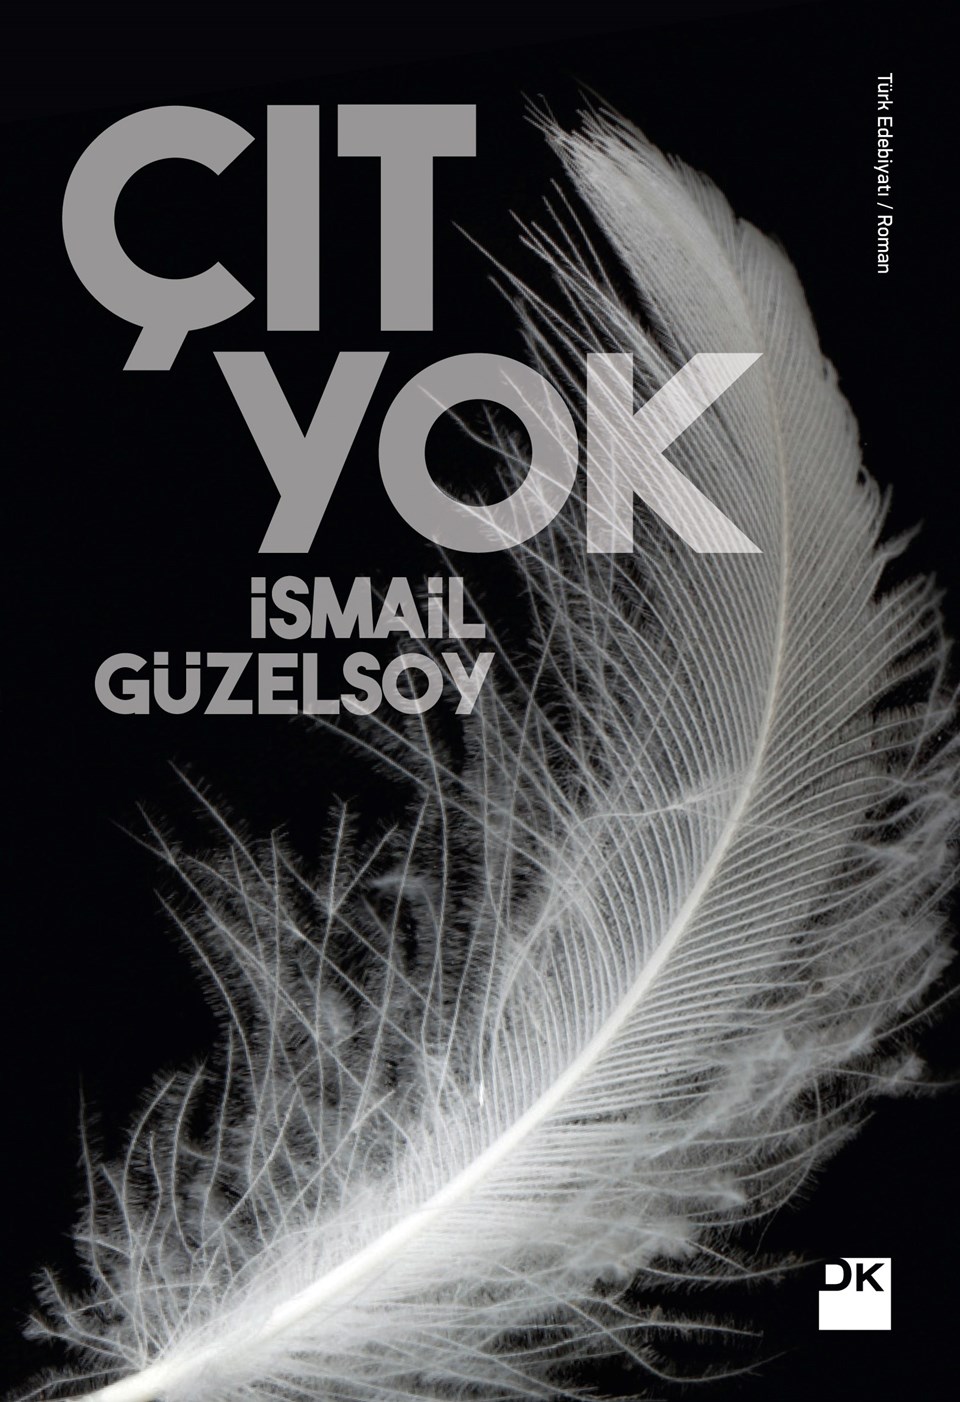 İsmail Güzelsoy'dan yeni roman: Çıt yok - 1